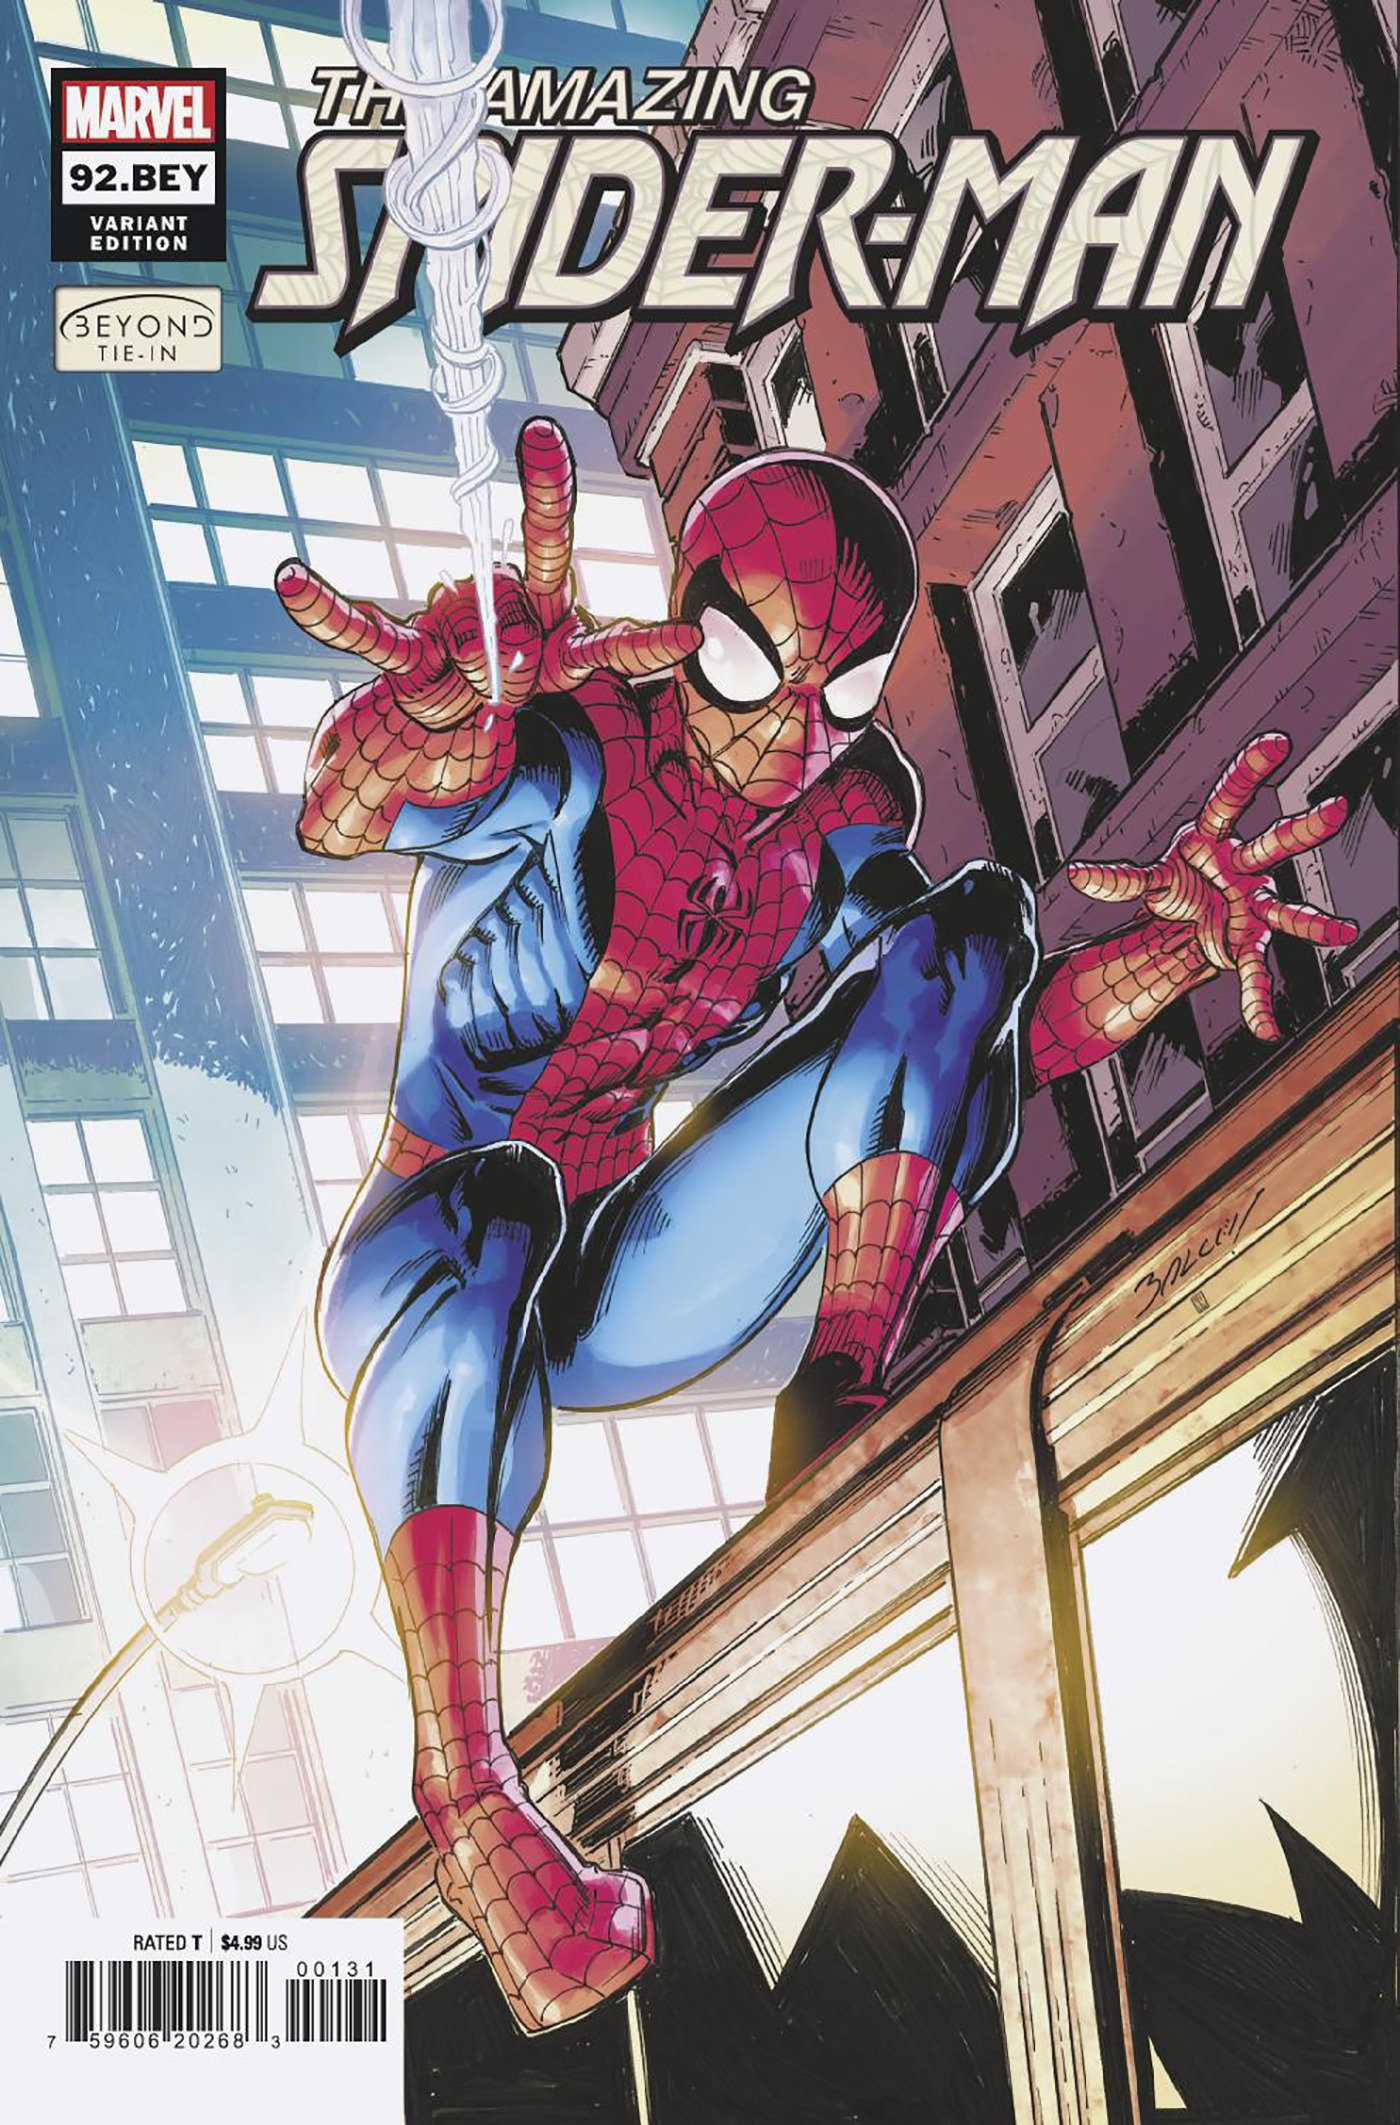 Amazing Spider-Man #92.1 Beyond Bagley Variant (2018)